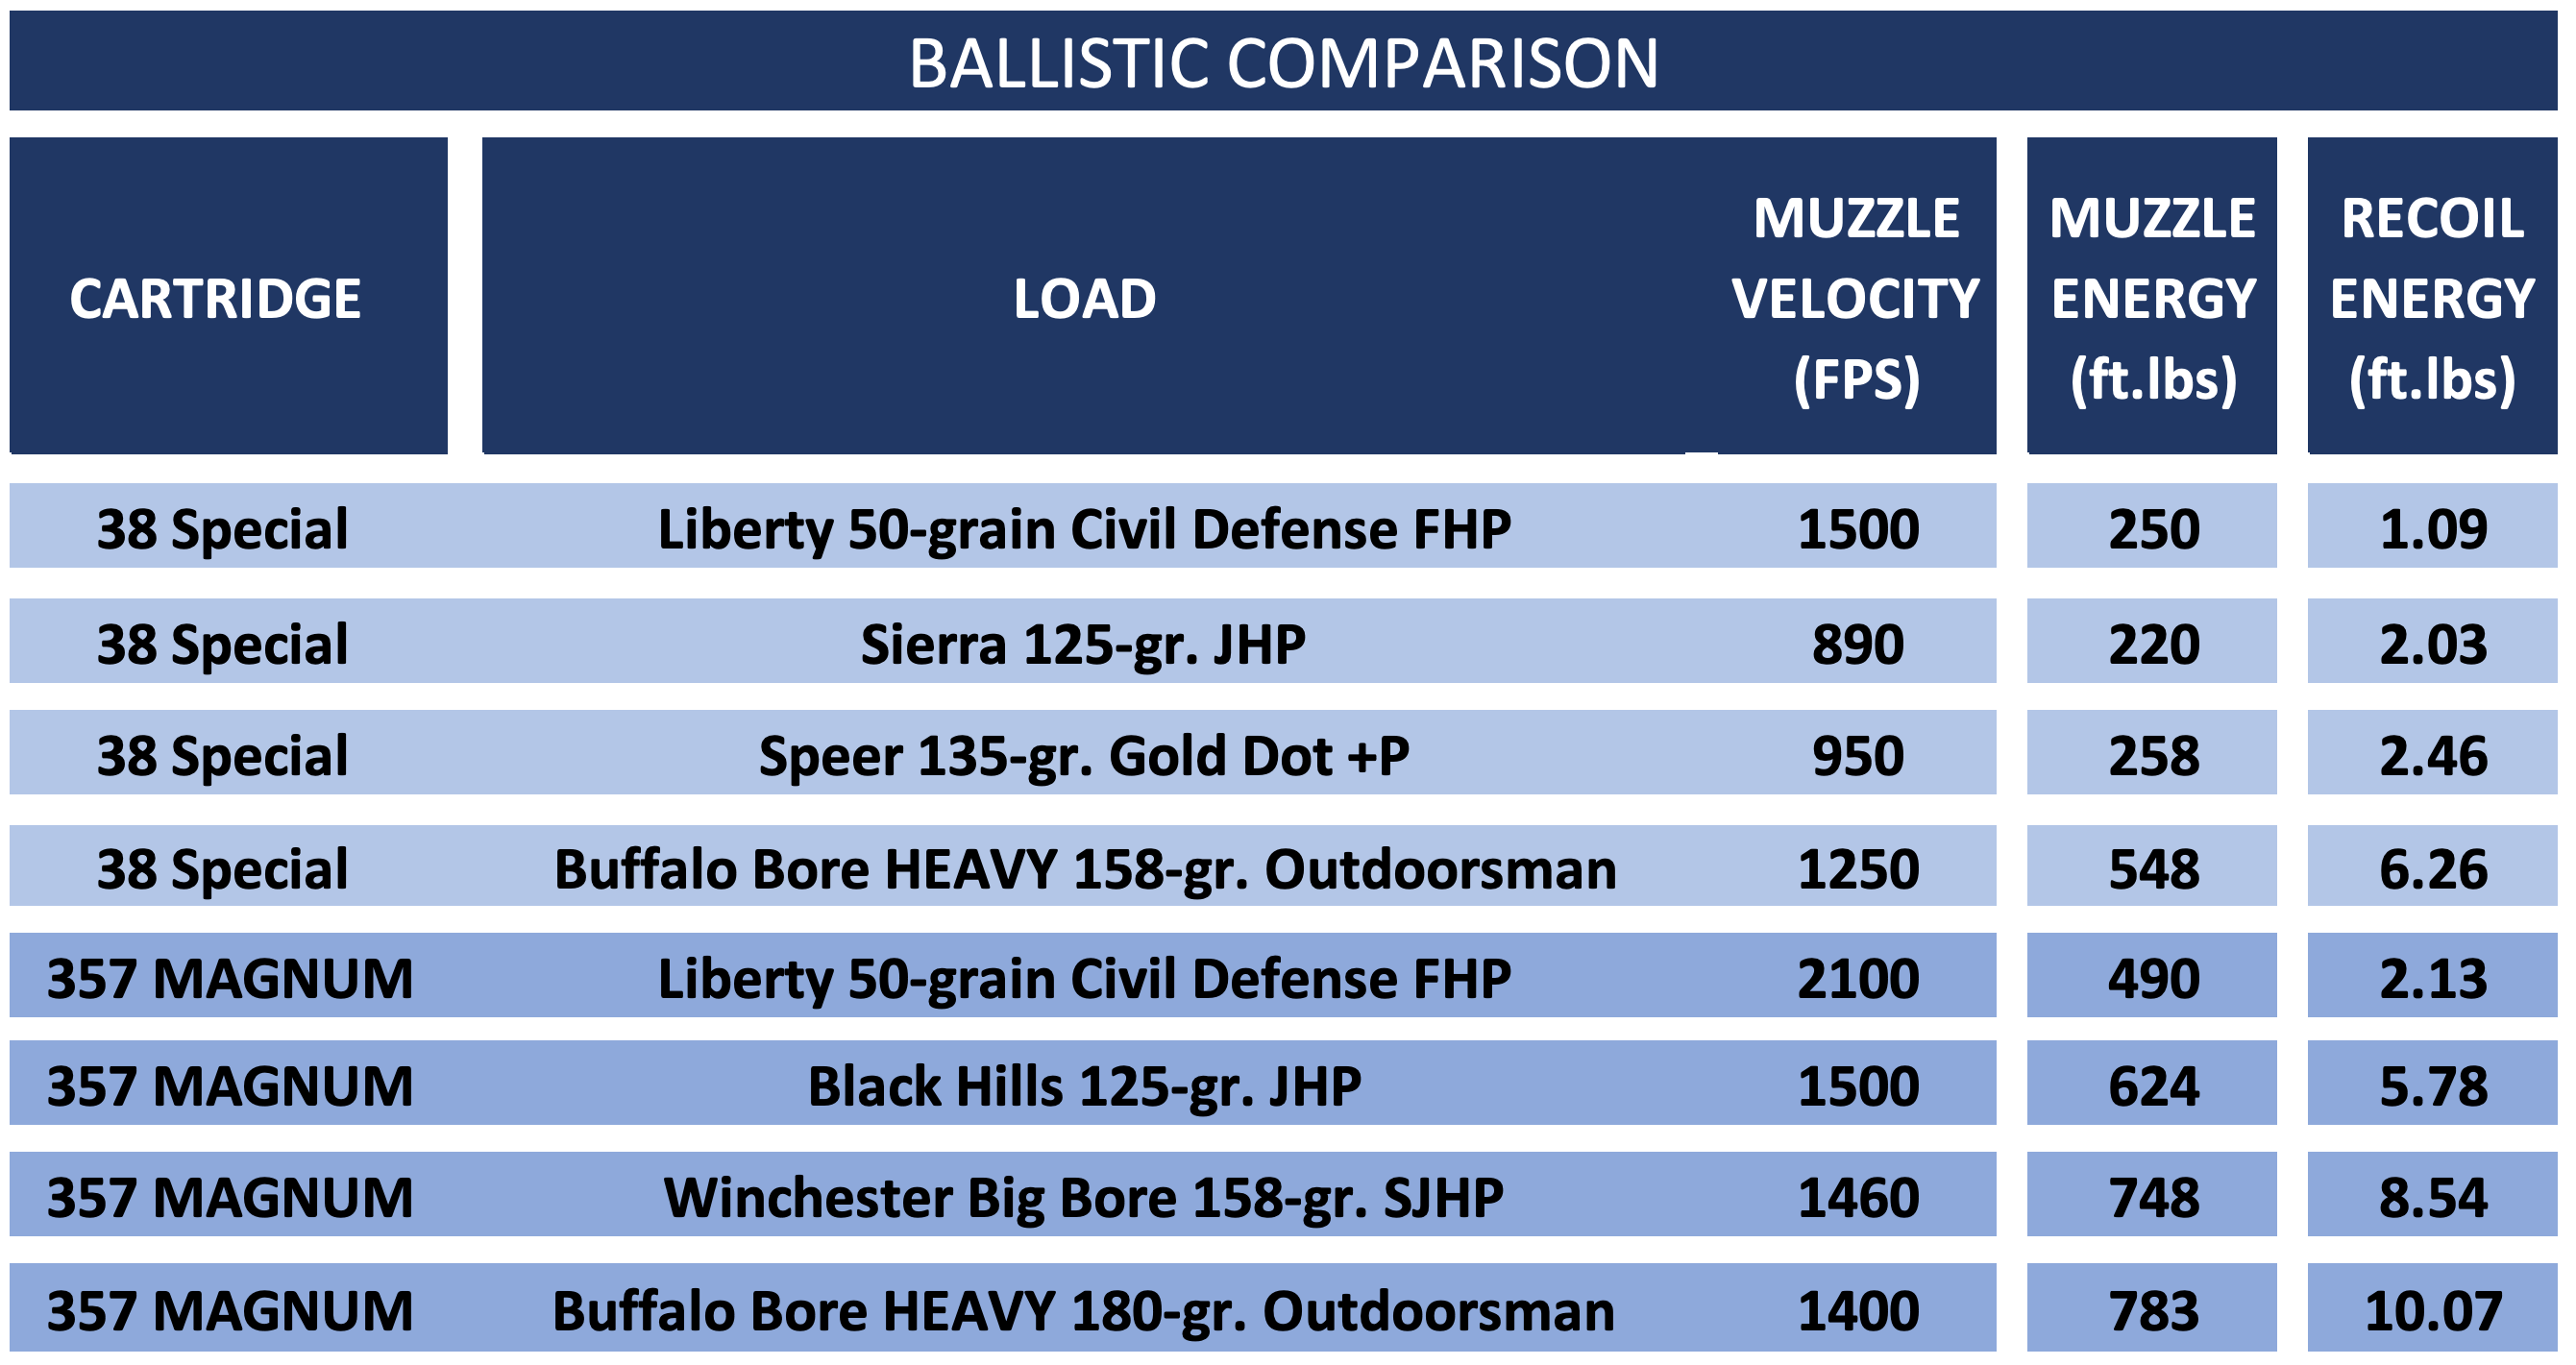 Chart comparing the ballistics of the 357 Magnum vs 38 Special